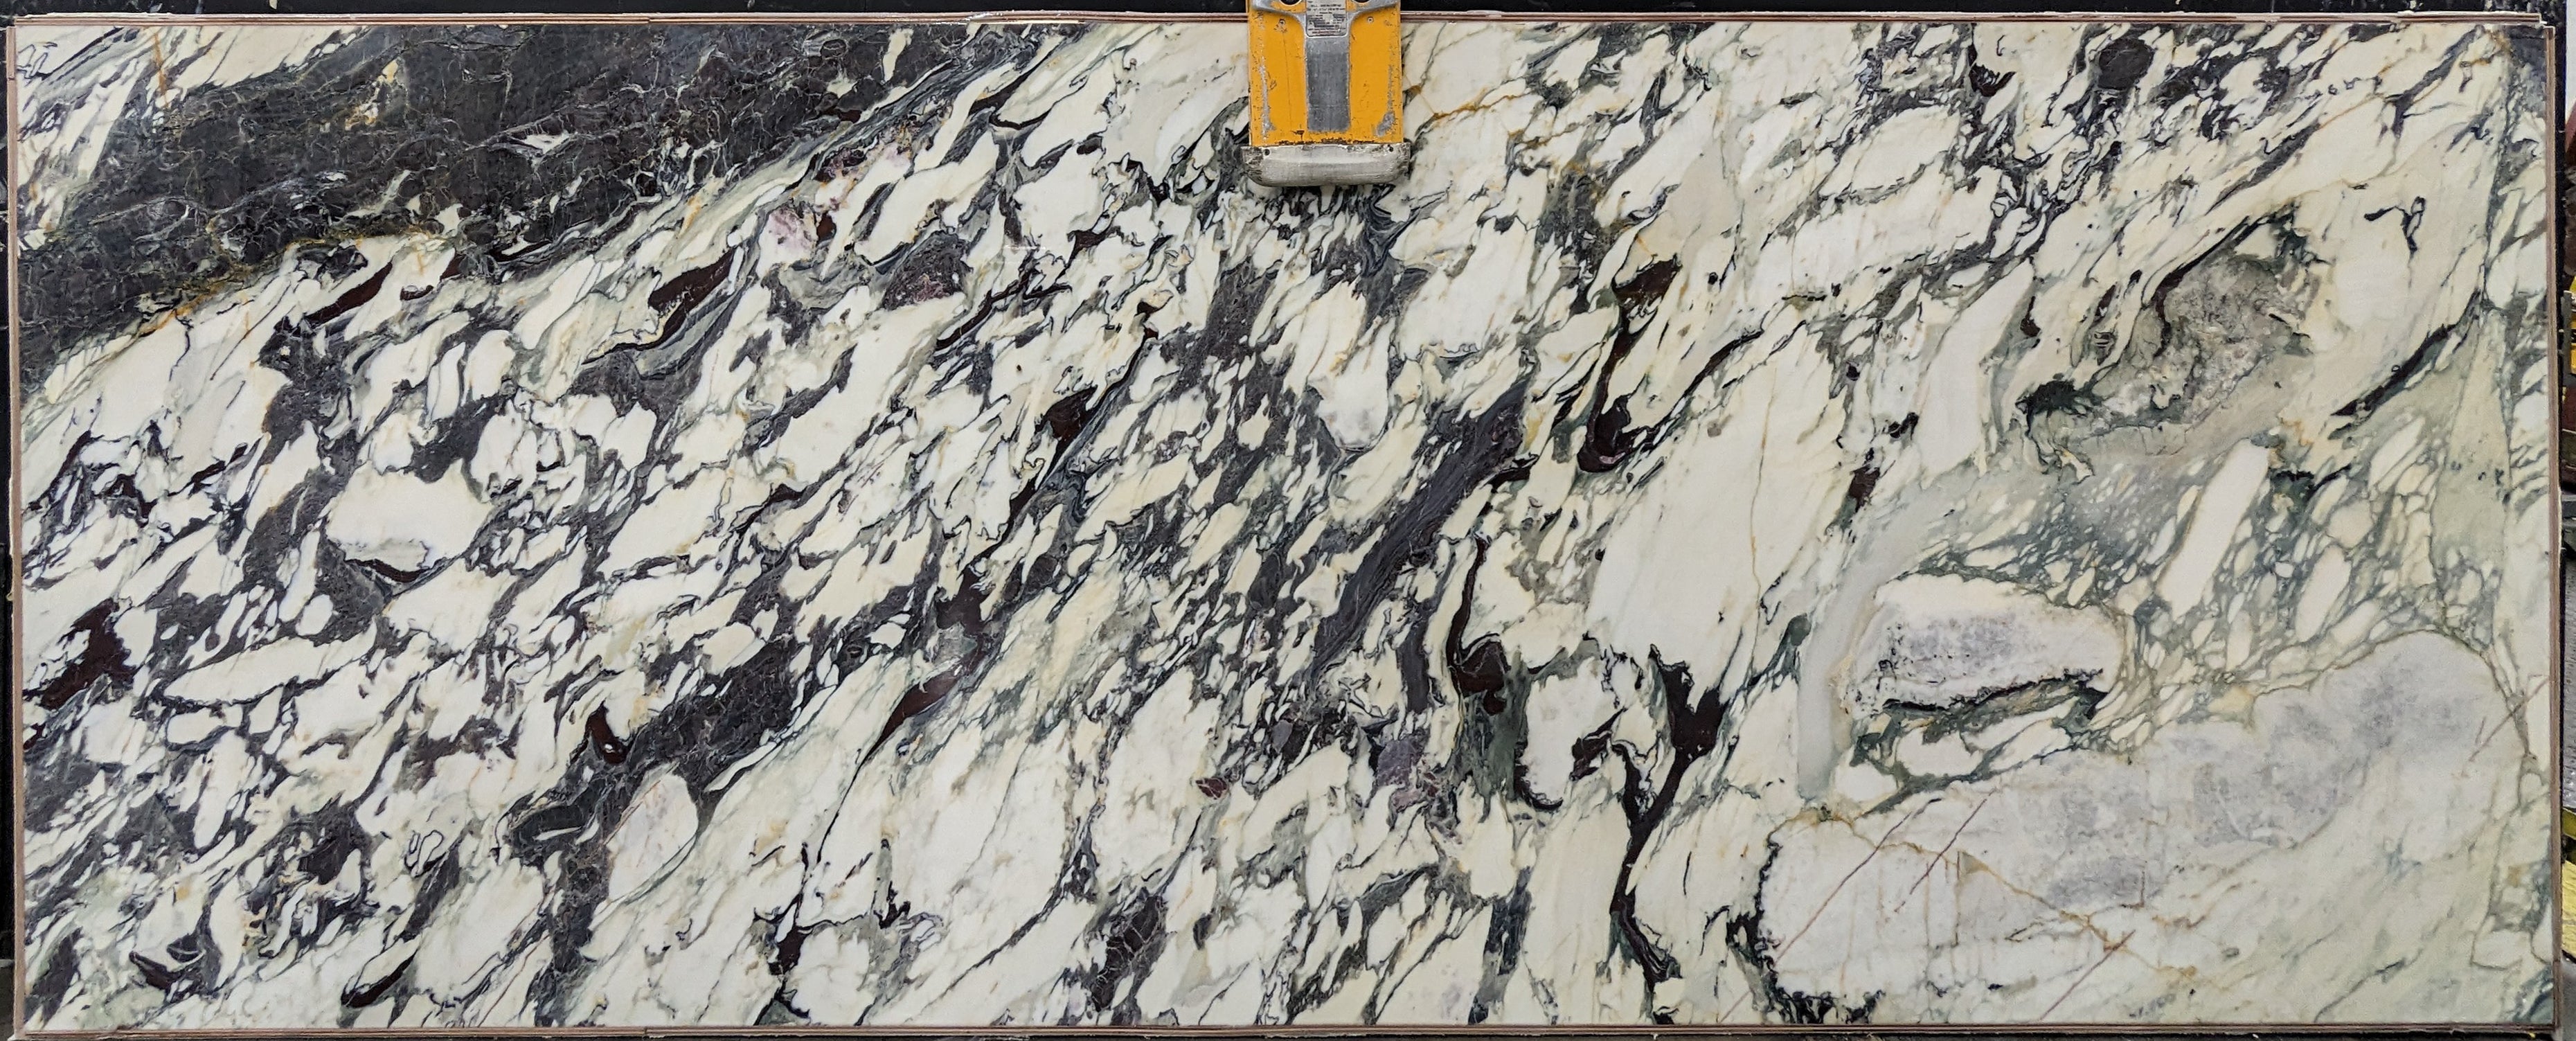  Breccia Capraia Marble Slab 3/4  Polished Stone - 96115#56 -  49x129 